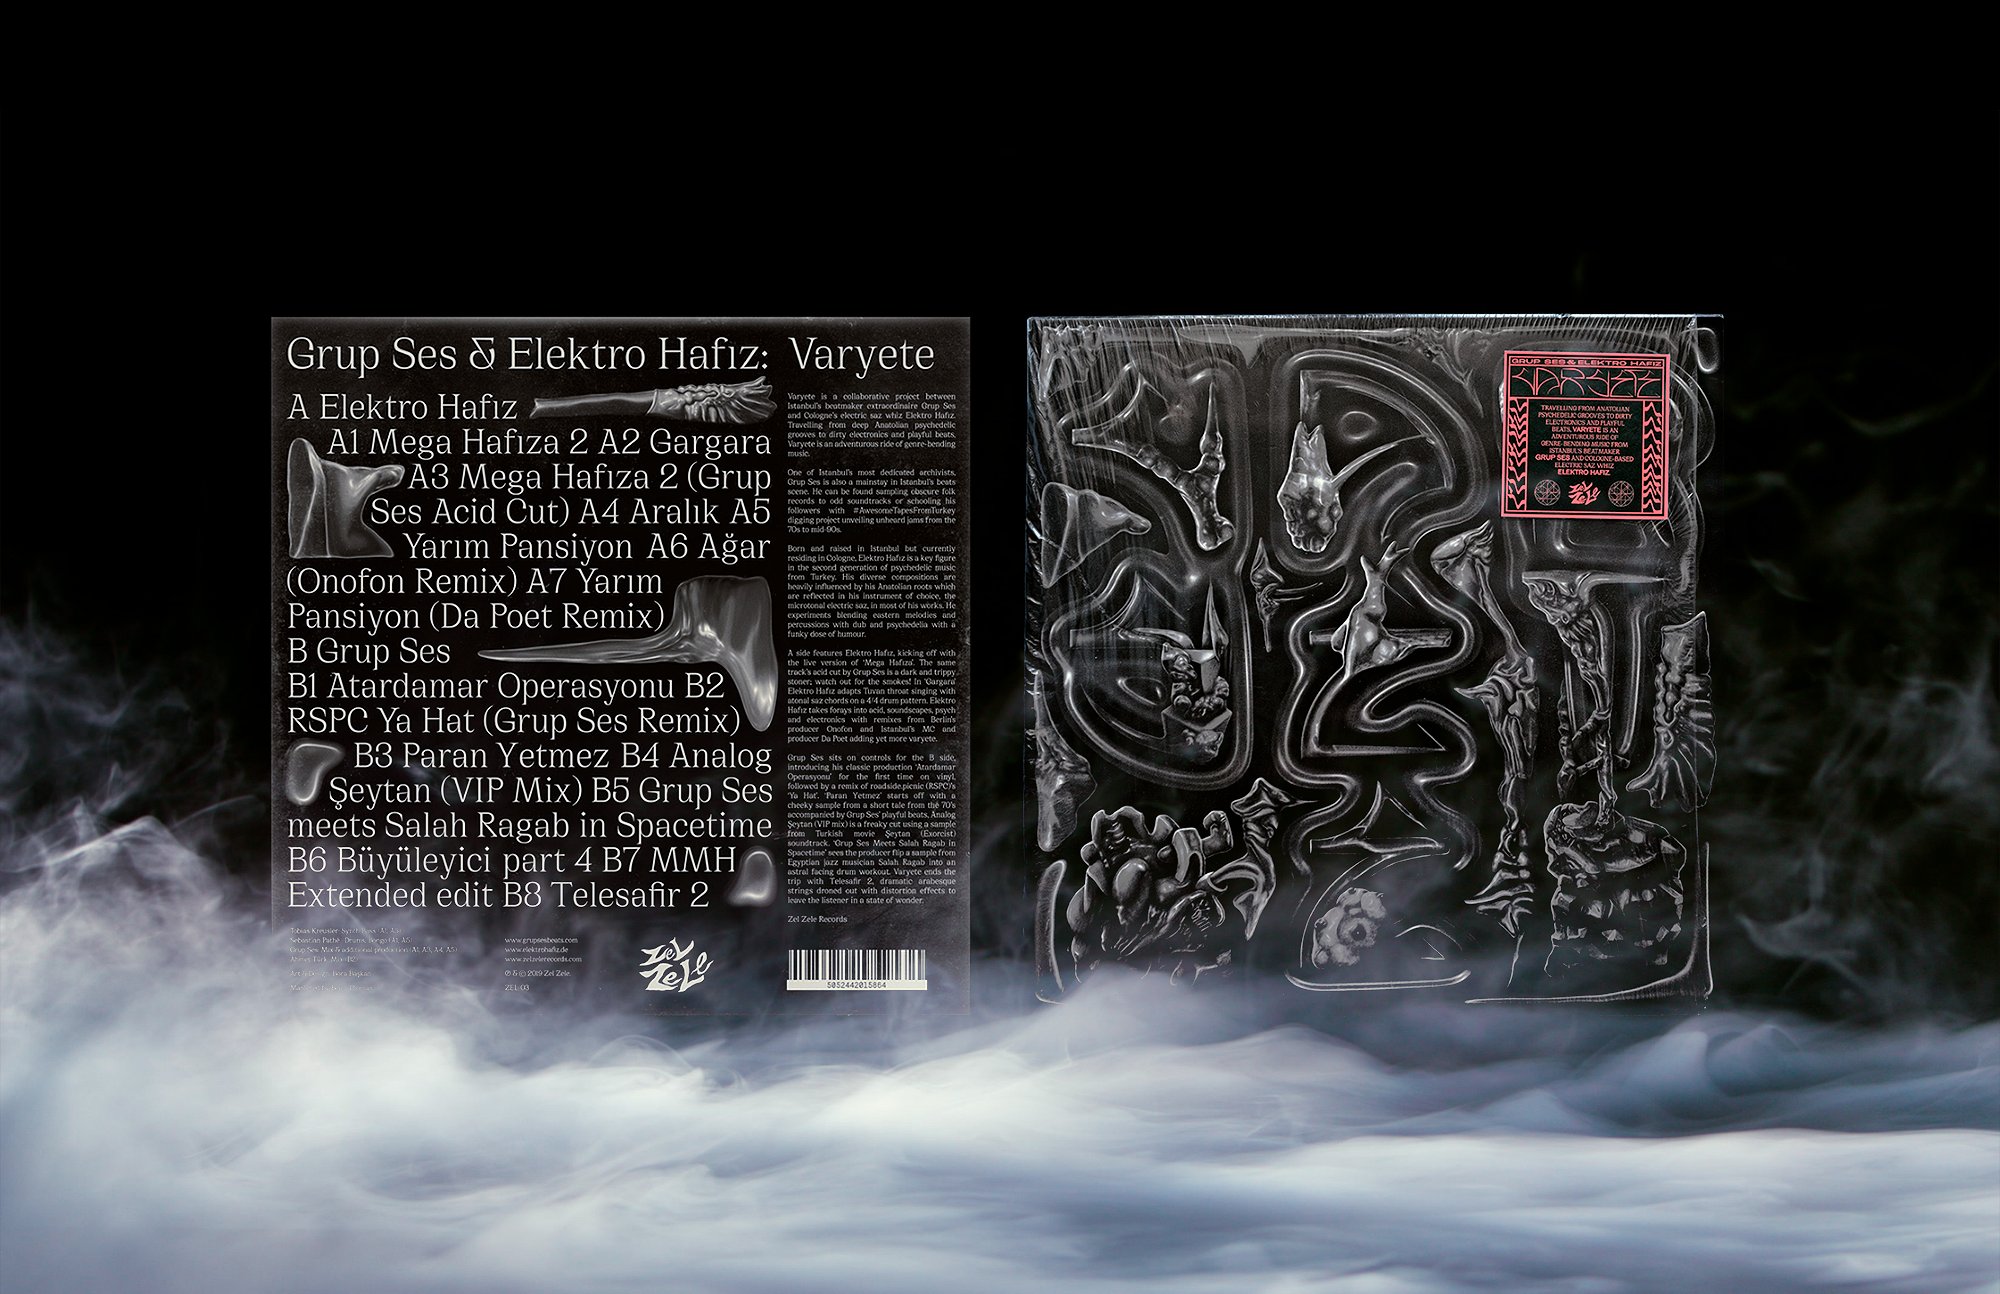 title:GRUP SES & ELEKTRO HAFIZ — VARYETE [12” LP] description:Album cover design. year:2019